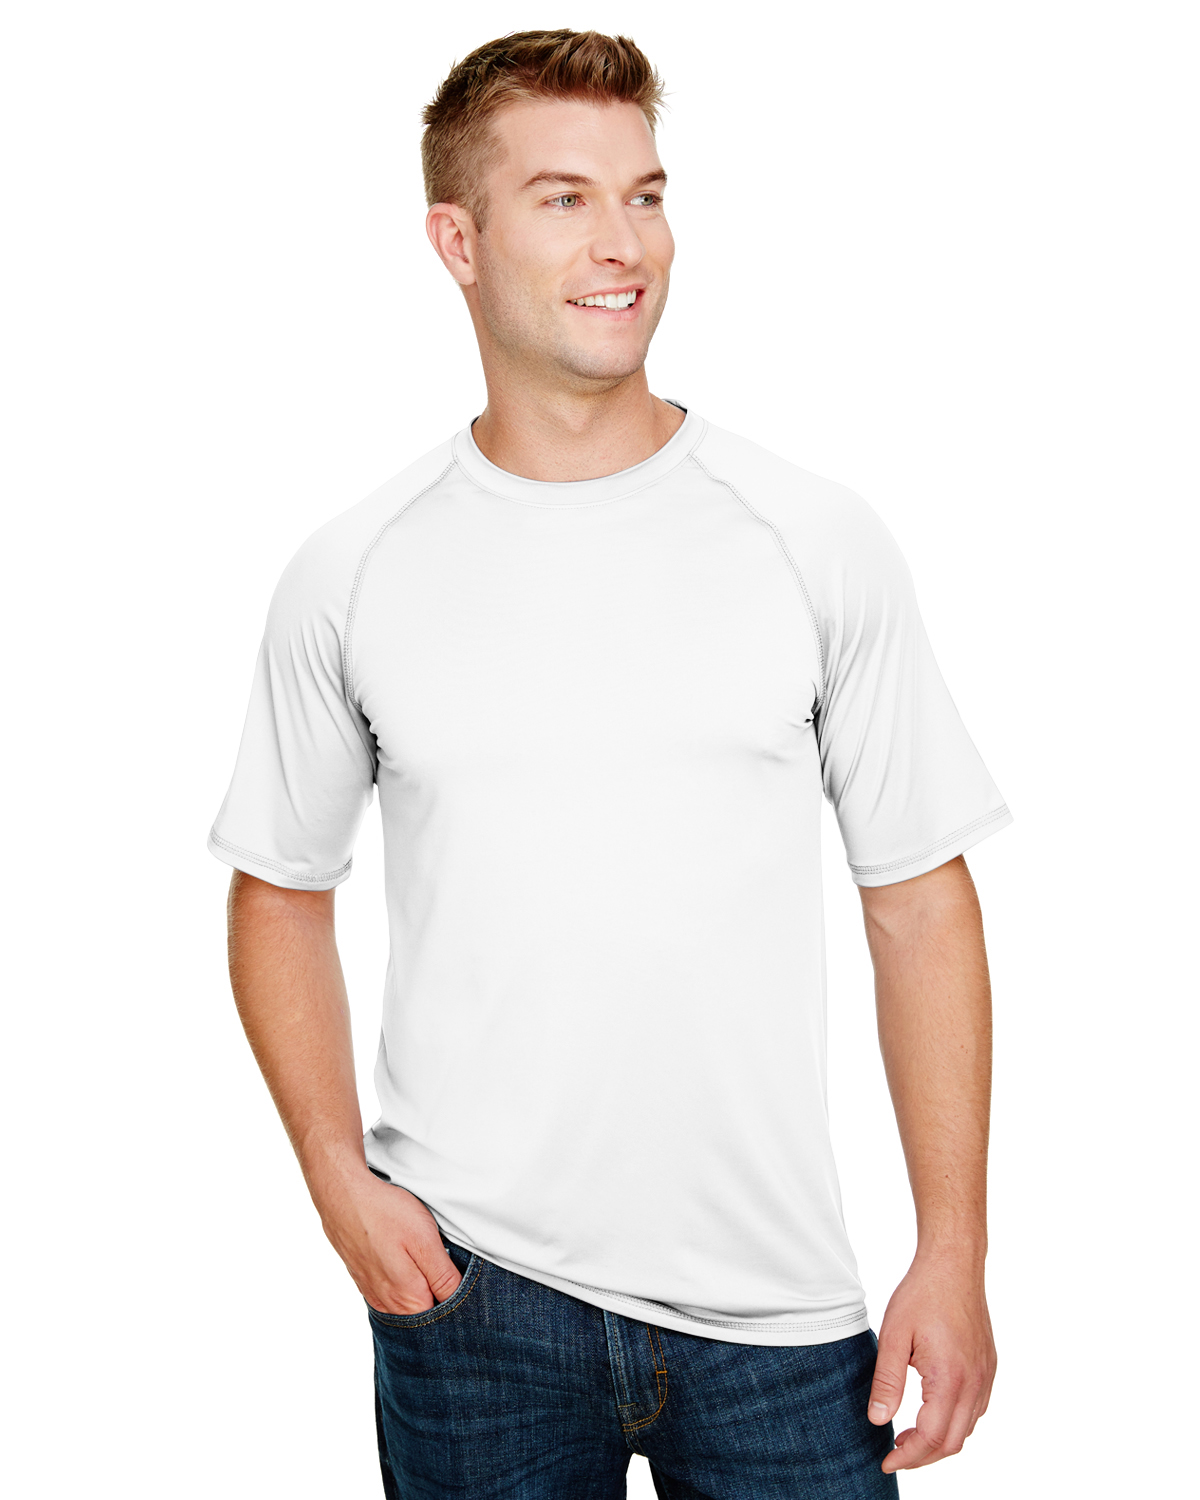 'Holloway 222551 Unisex Dry-Excel Swift Wicking Training T-Shirt'